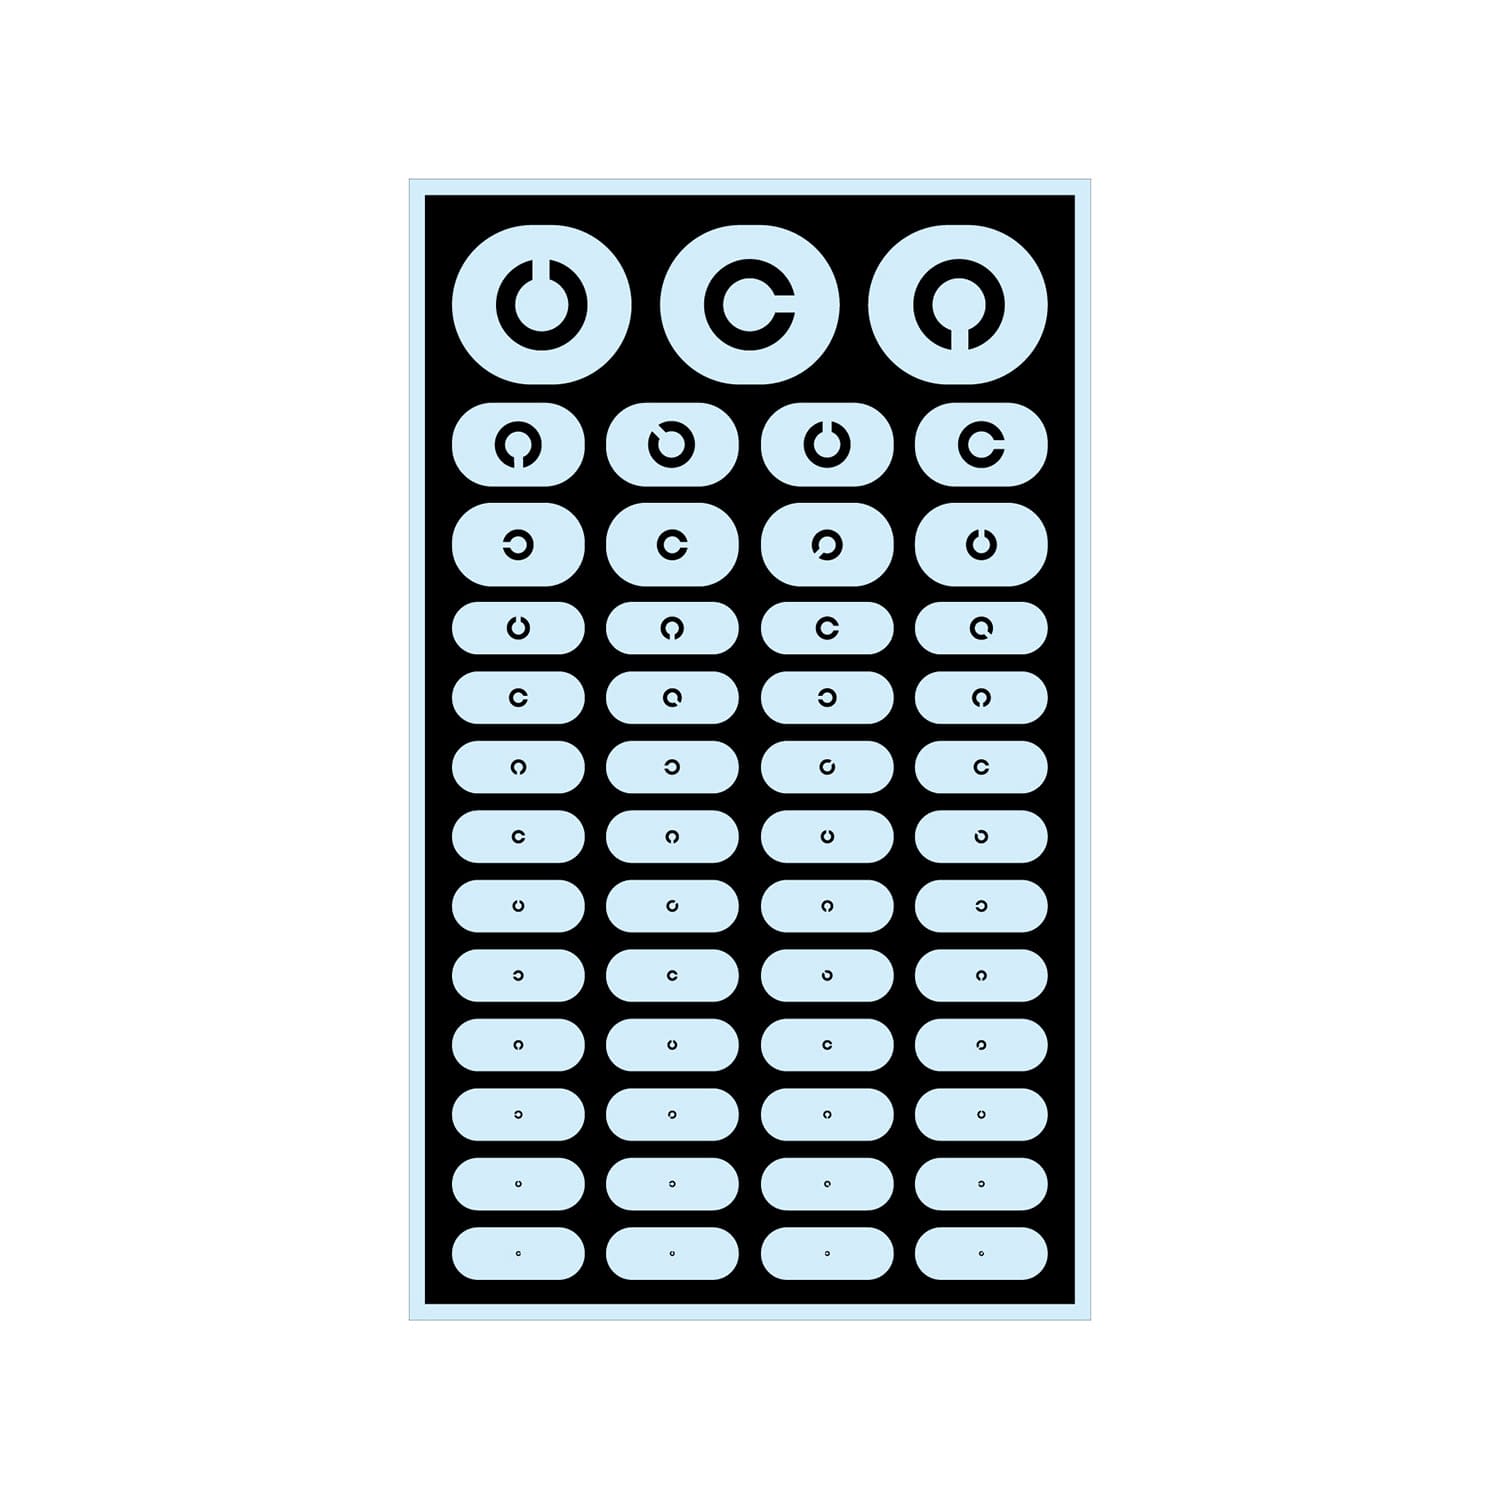 (24-3181-00)ＬＥＤ式視力検査器（スタンド式３ｍ用 RC-90A-3(8ﾎｳｺｳ) LEDｼｷｼﾘｮｸｹﾝｻｷｽﾀﾝﾄﾞｼｷ【1台単位】【2019年カタログ商品】